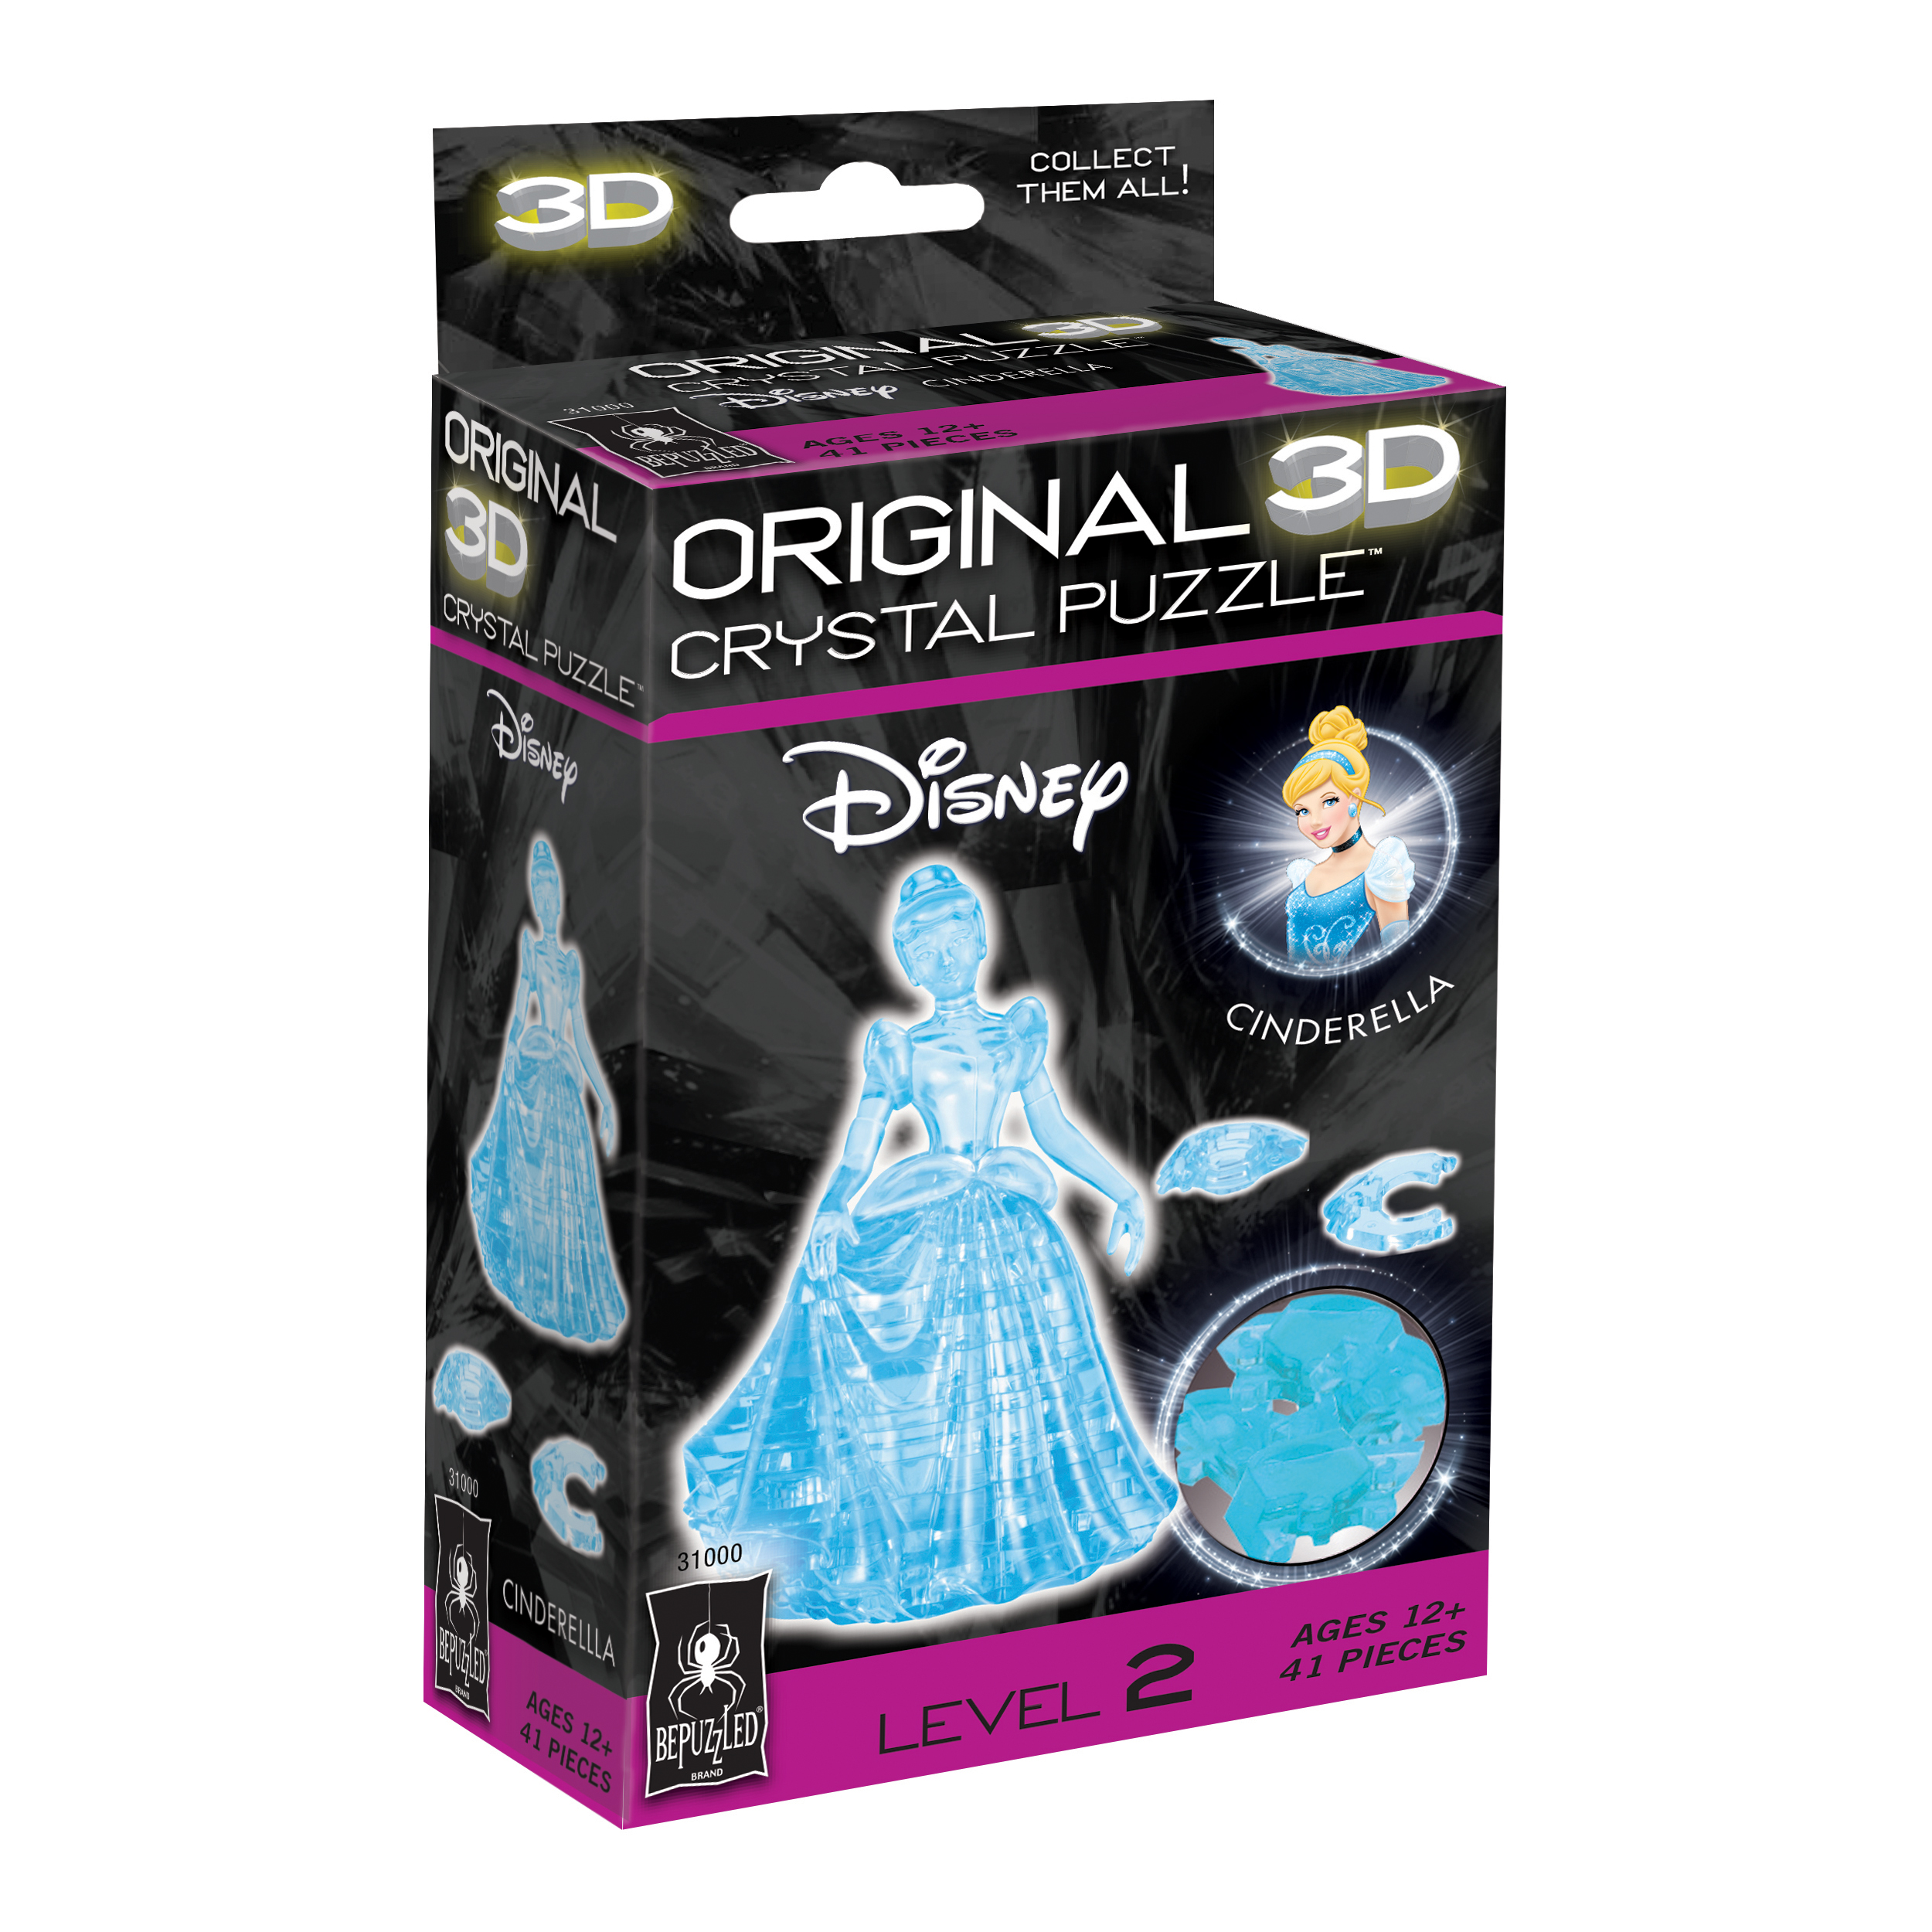 Bepuzzled 3D Crystal Puzzle Disney Cinderella 41 Pcs